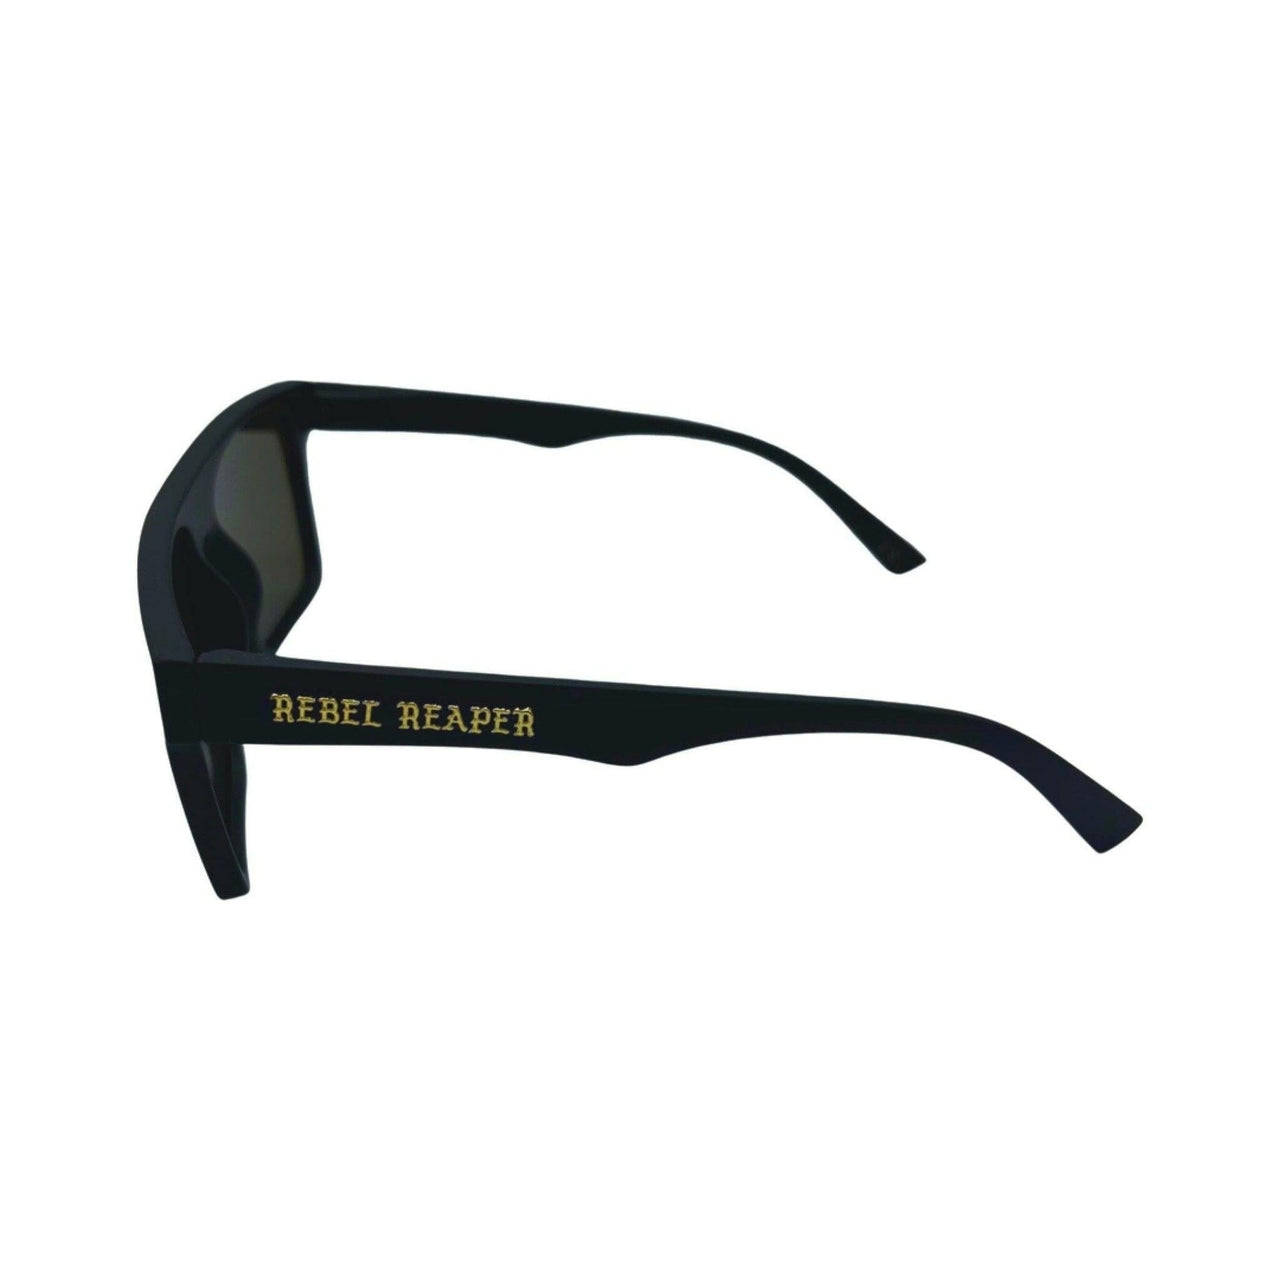 Silver Party Shades Polarized Lens Sunglasses